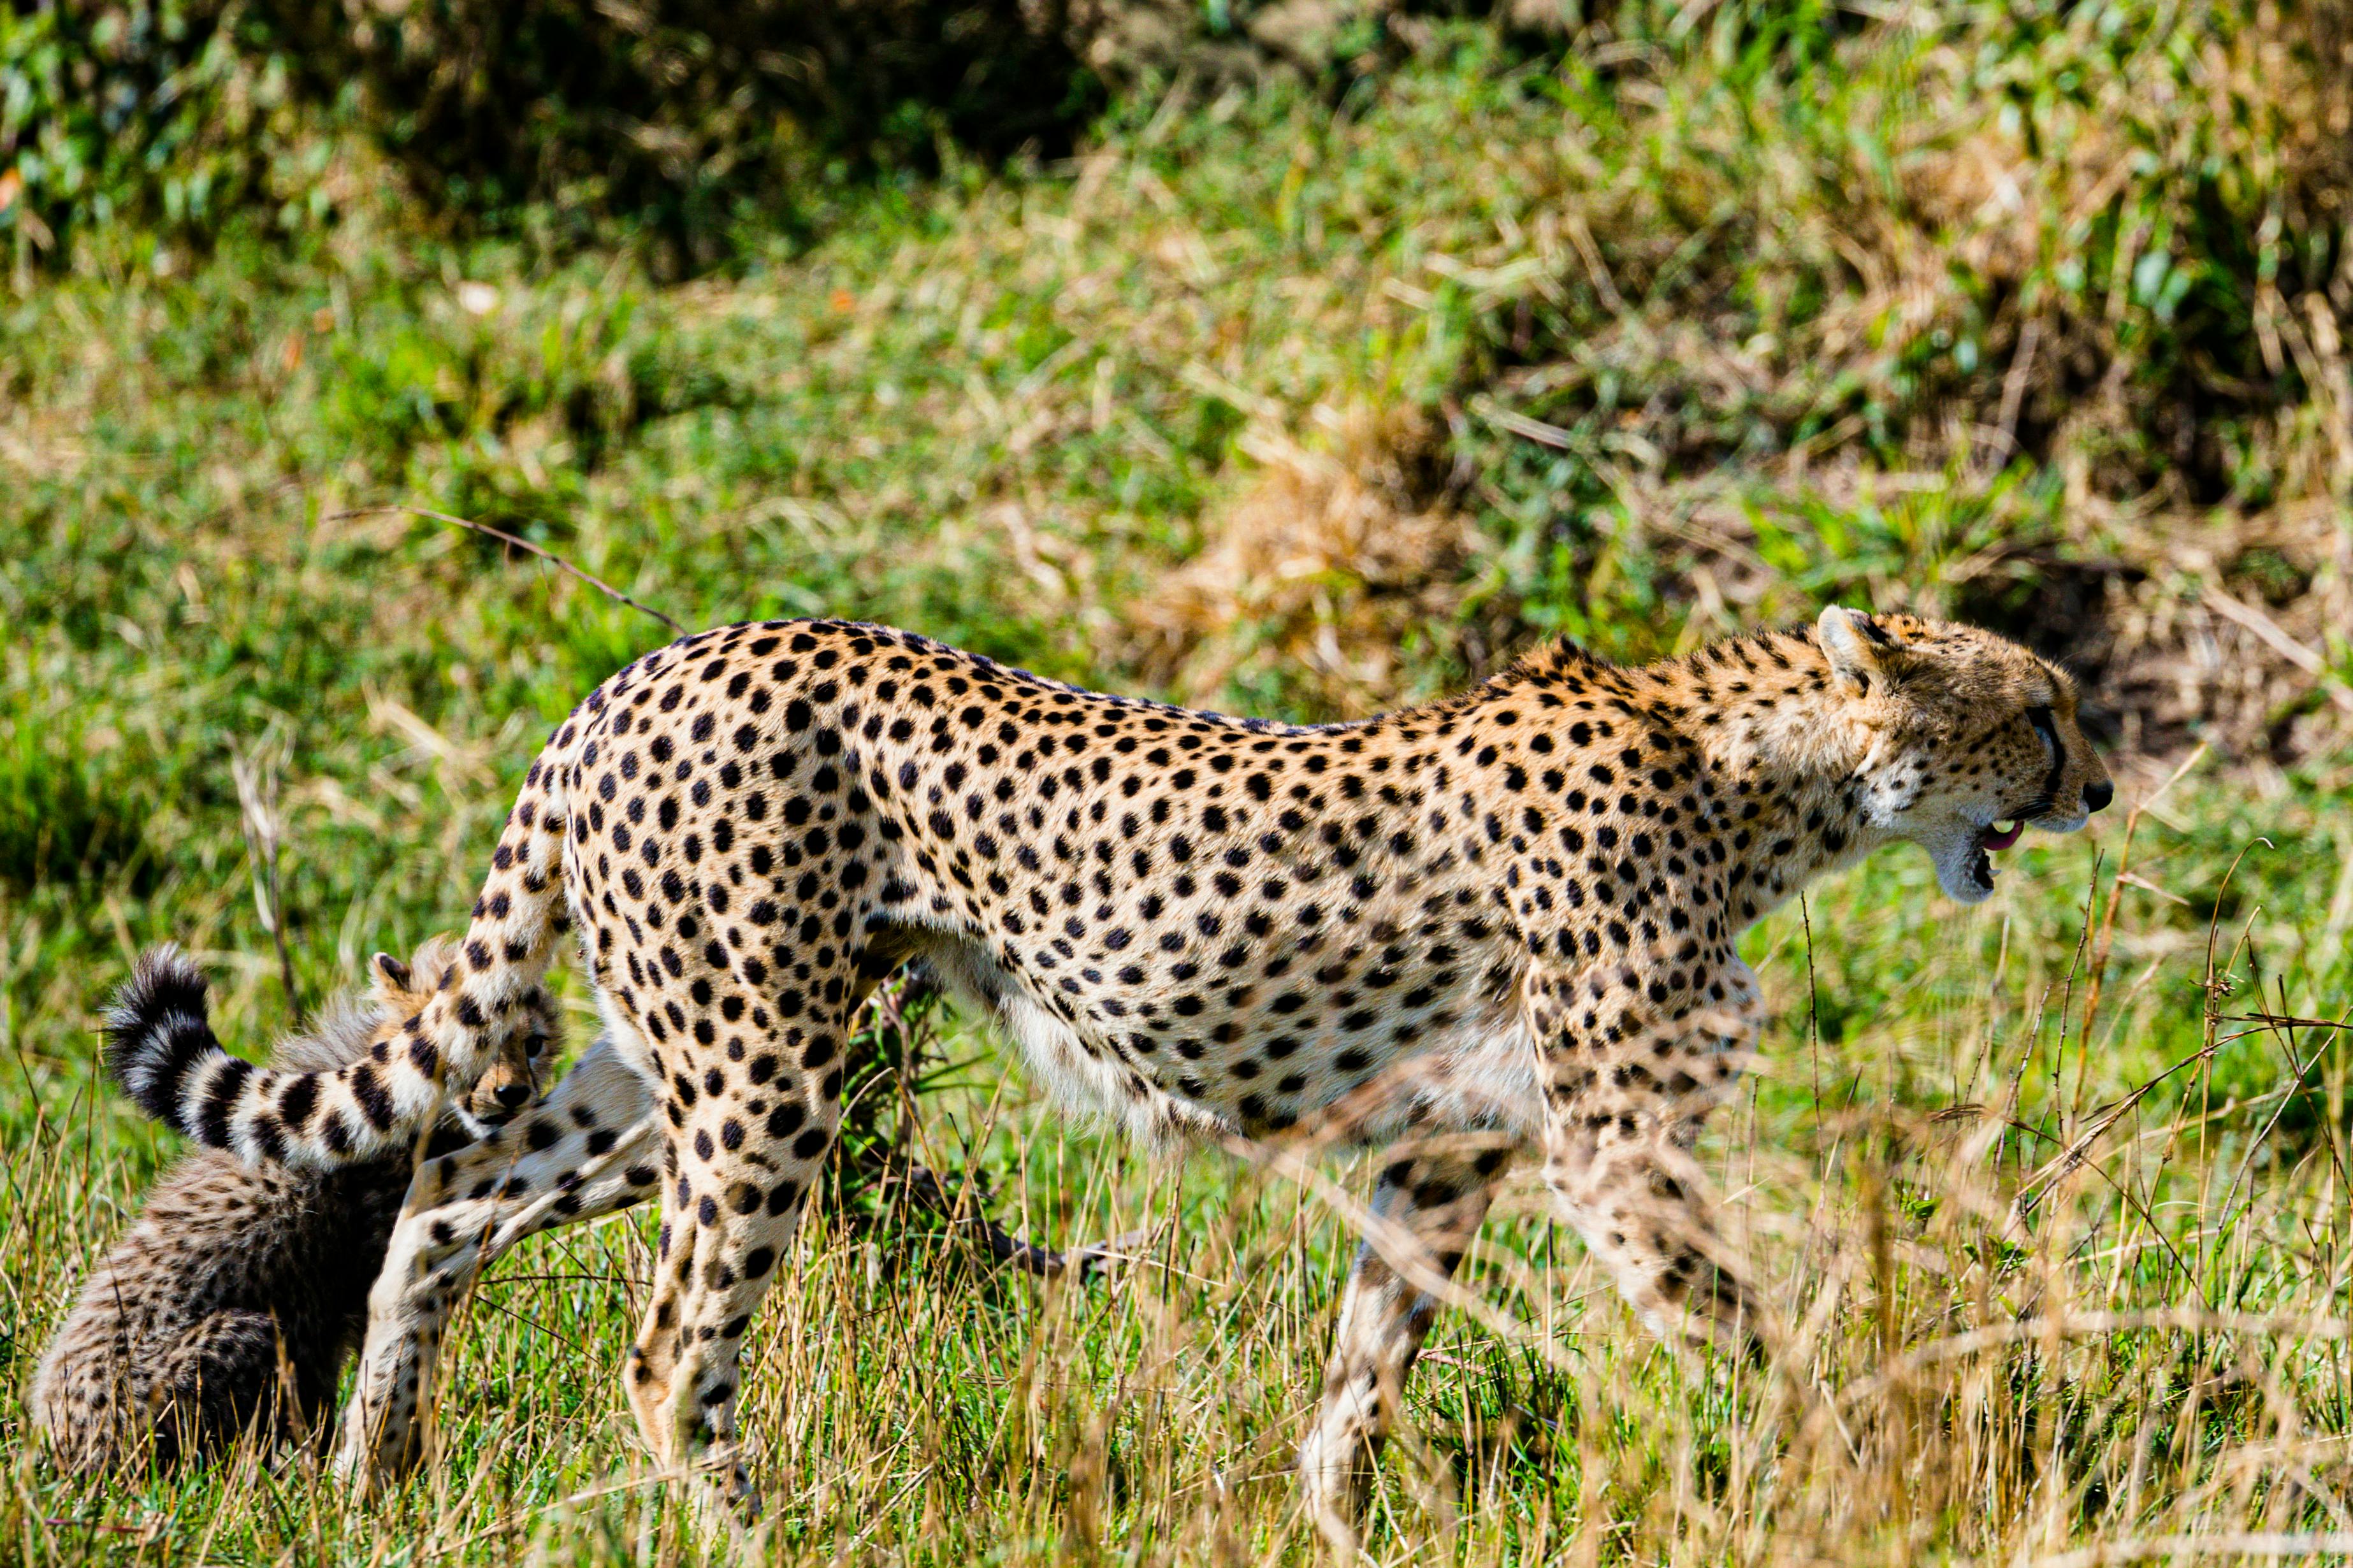 Safari Ltd® Running Cheetah